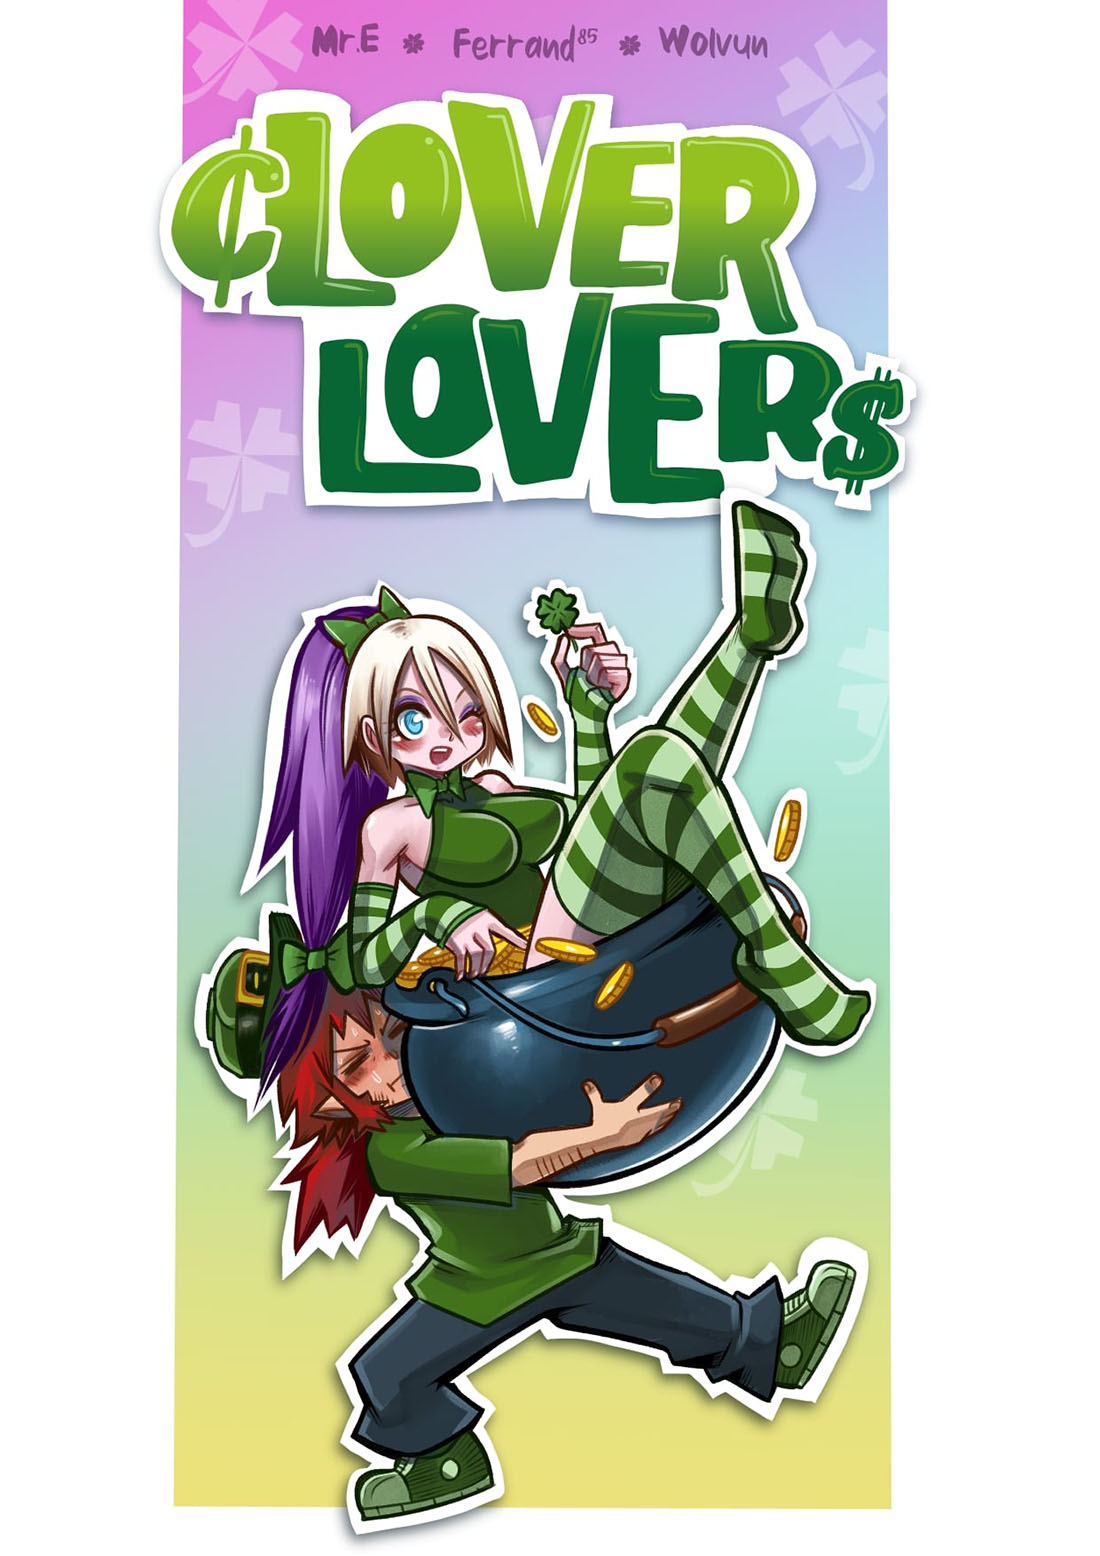 Clover LOVERS